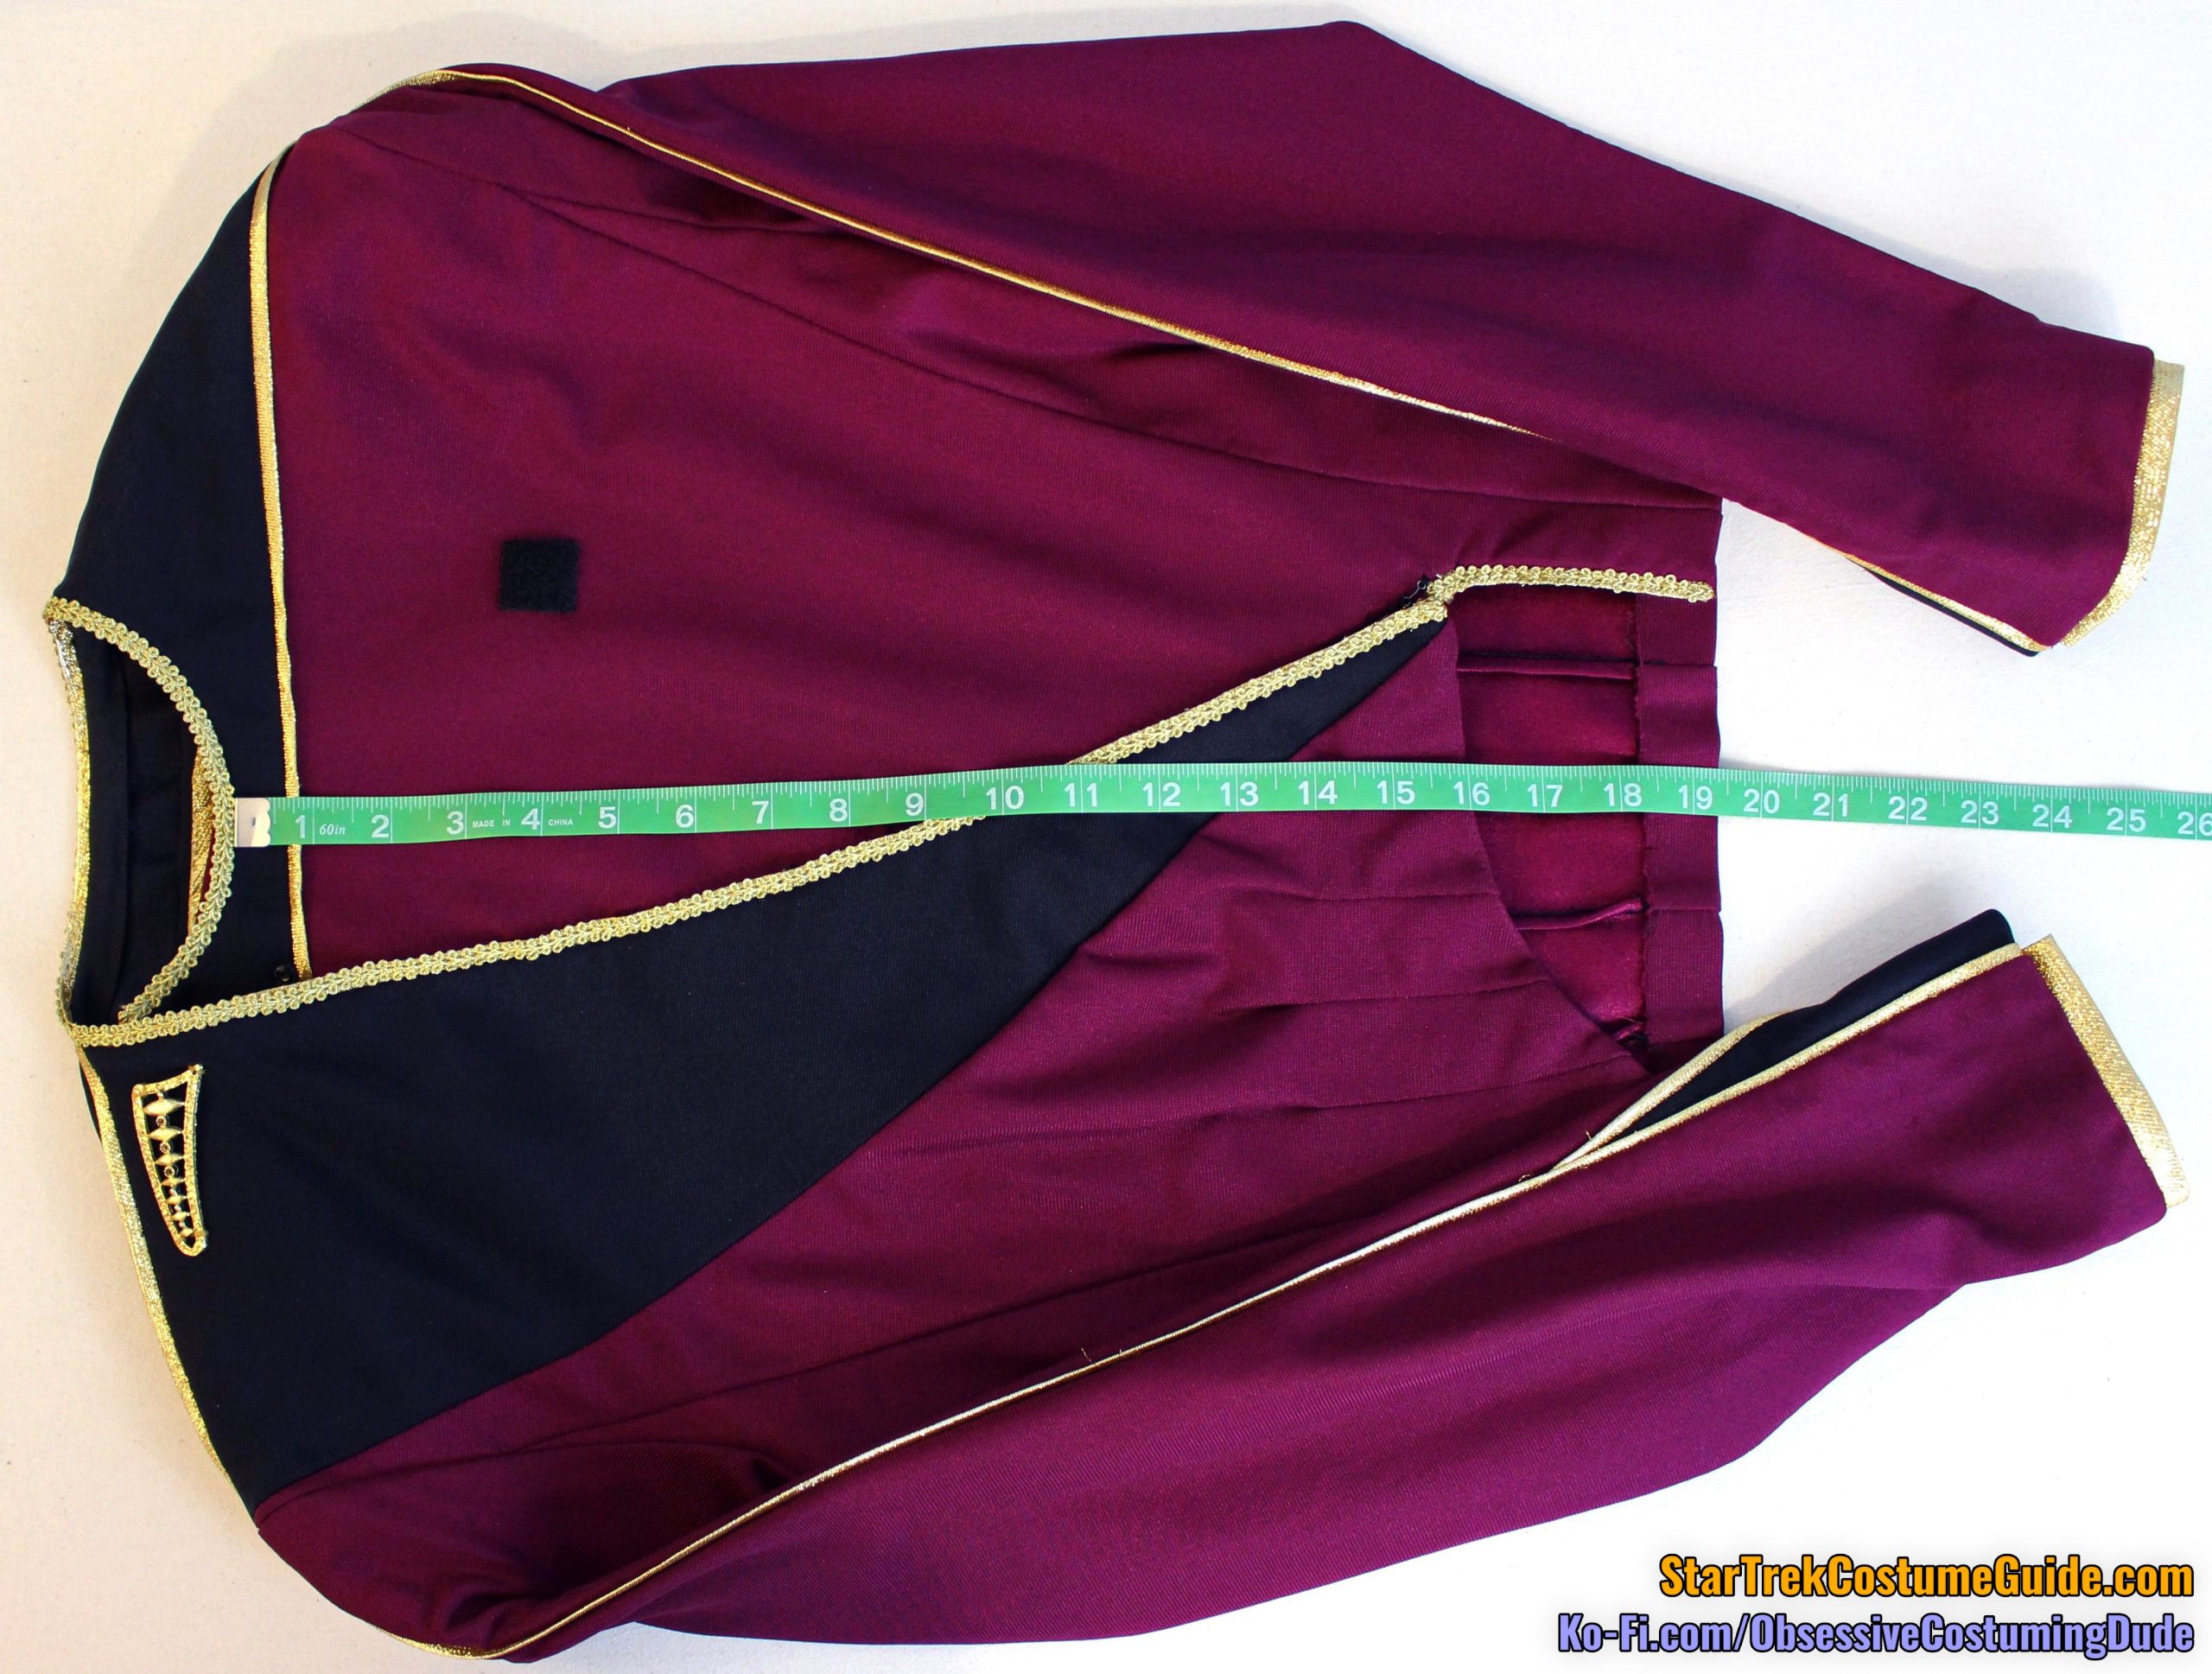 TNG admiral uniform (season 1) examination - Star Trek Costume Guide